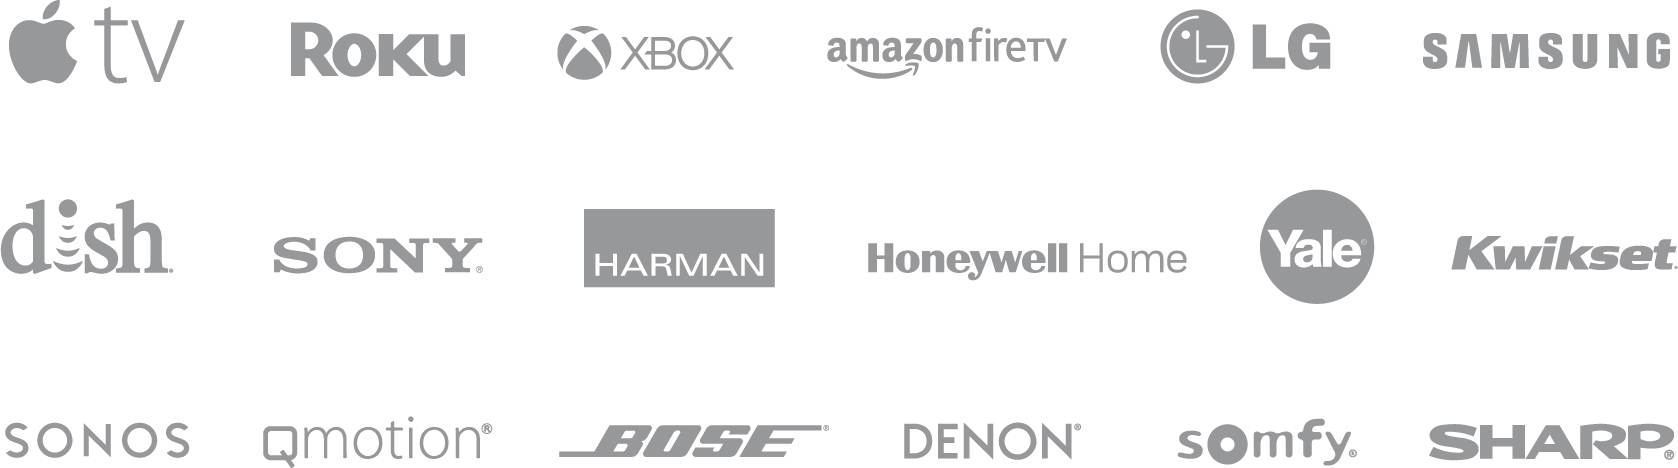 Apple TV, Roku, Amazon, Lutron, LG, Samsung, Dish, Sony, Bose, Denon, Yale, Kwikset, Sonos, QMotion, Harman, Honeywell, Somfy, Sharp